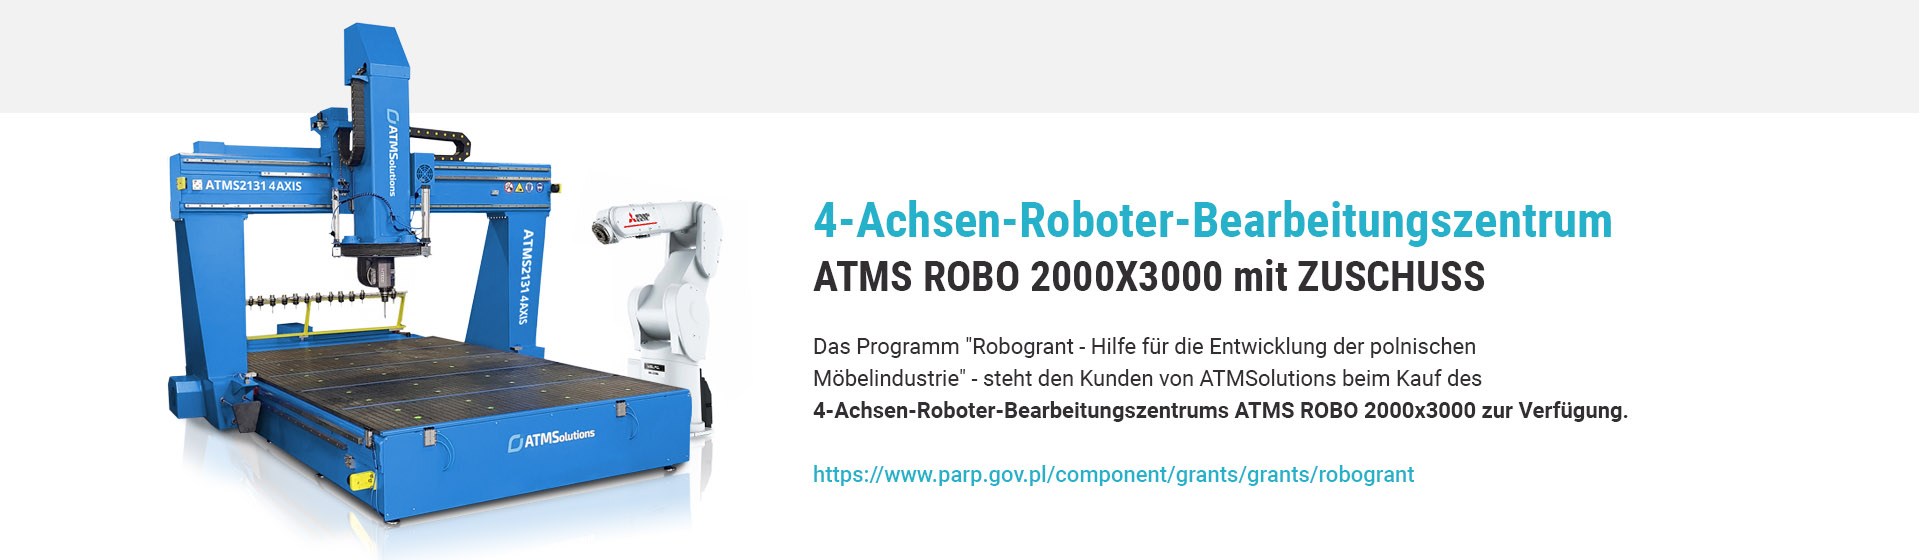 4-Achsen-Roboter-Bearbeitungszentrum ATMS ROBO 2000X3000 mit Zuschuss